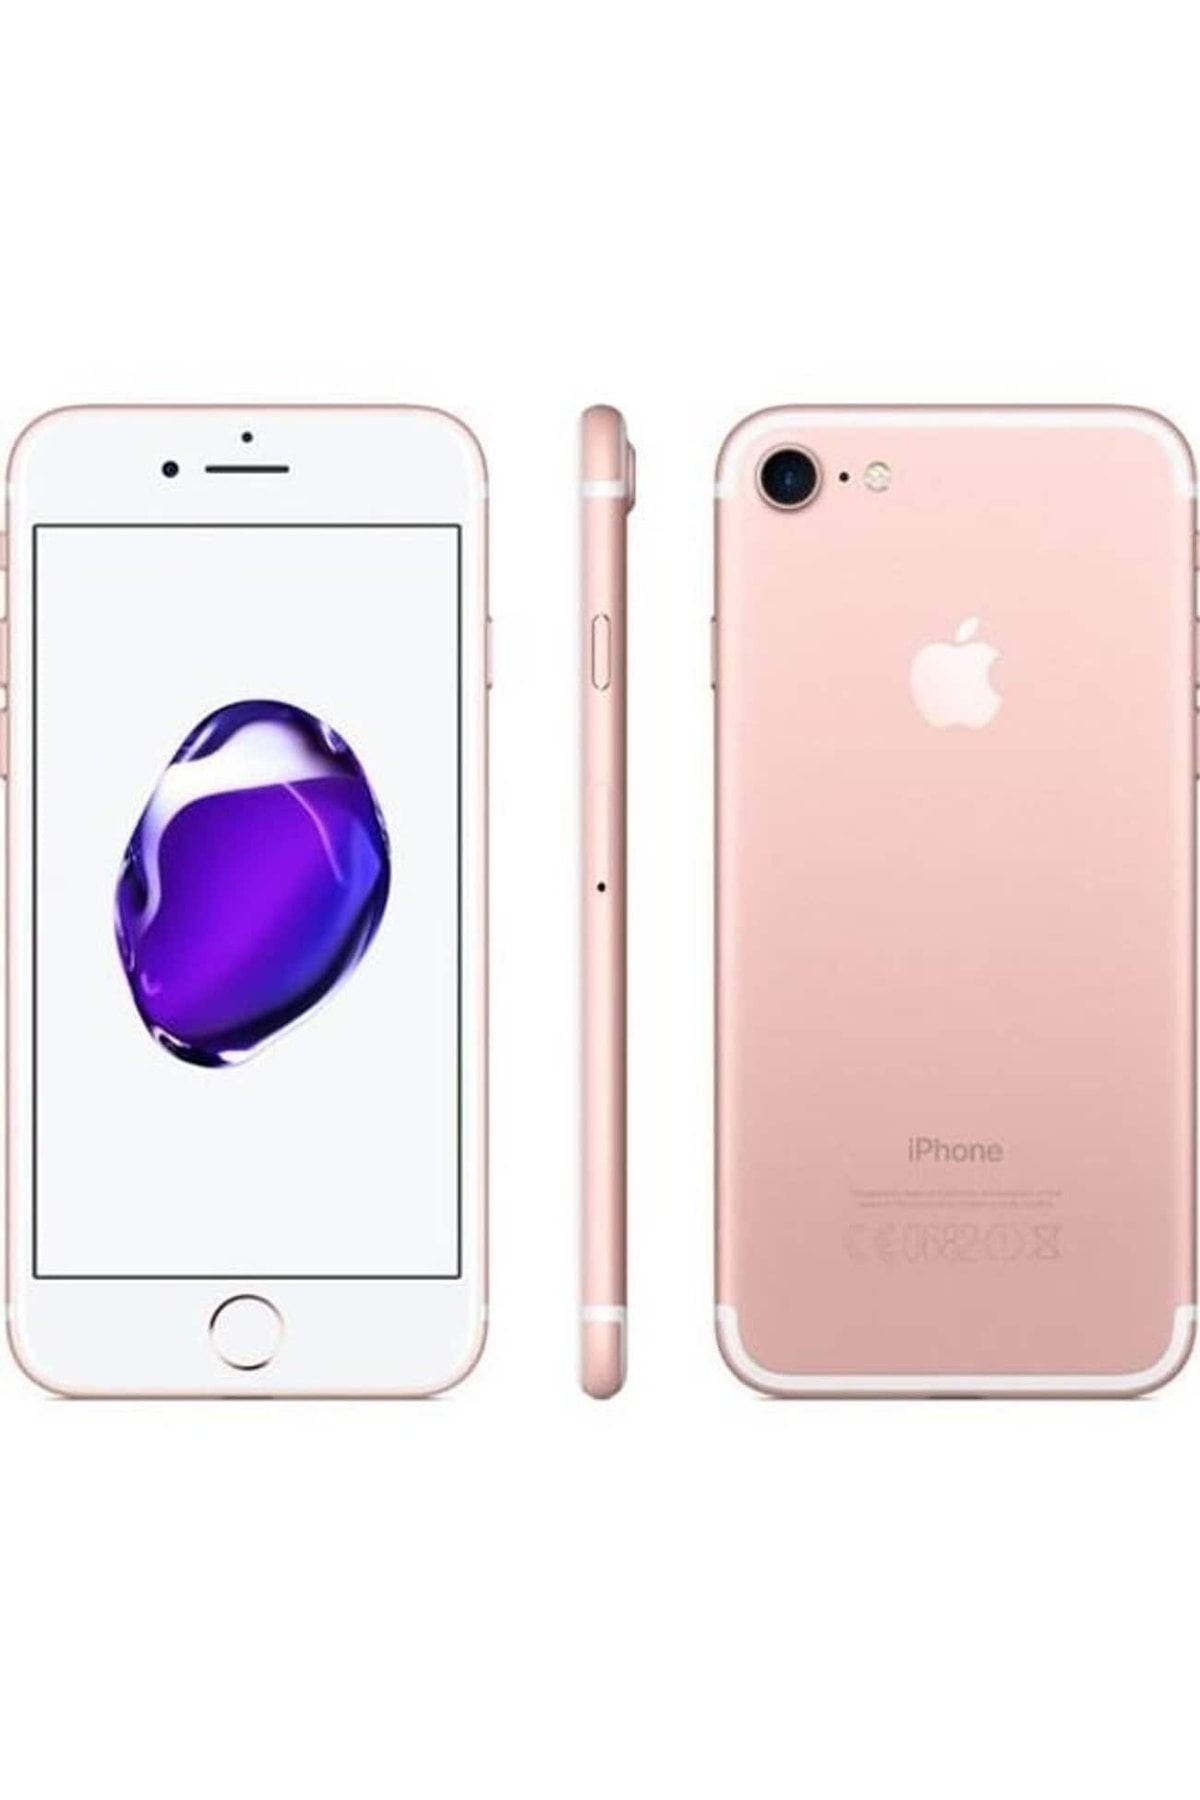 Apple Yenilenmiş iPhone 7 32 GB Rose Gold B Grade Cep Telefonu (12 Ay Garantili)